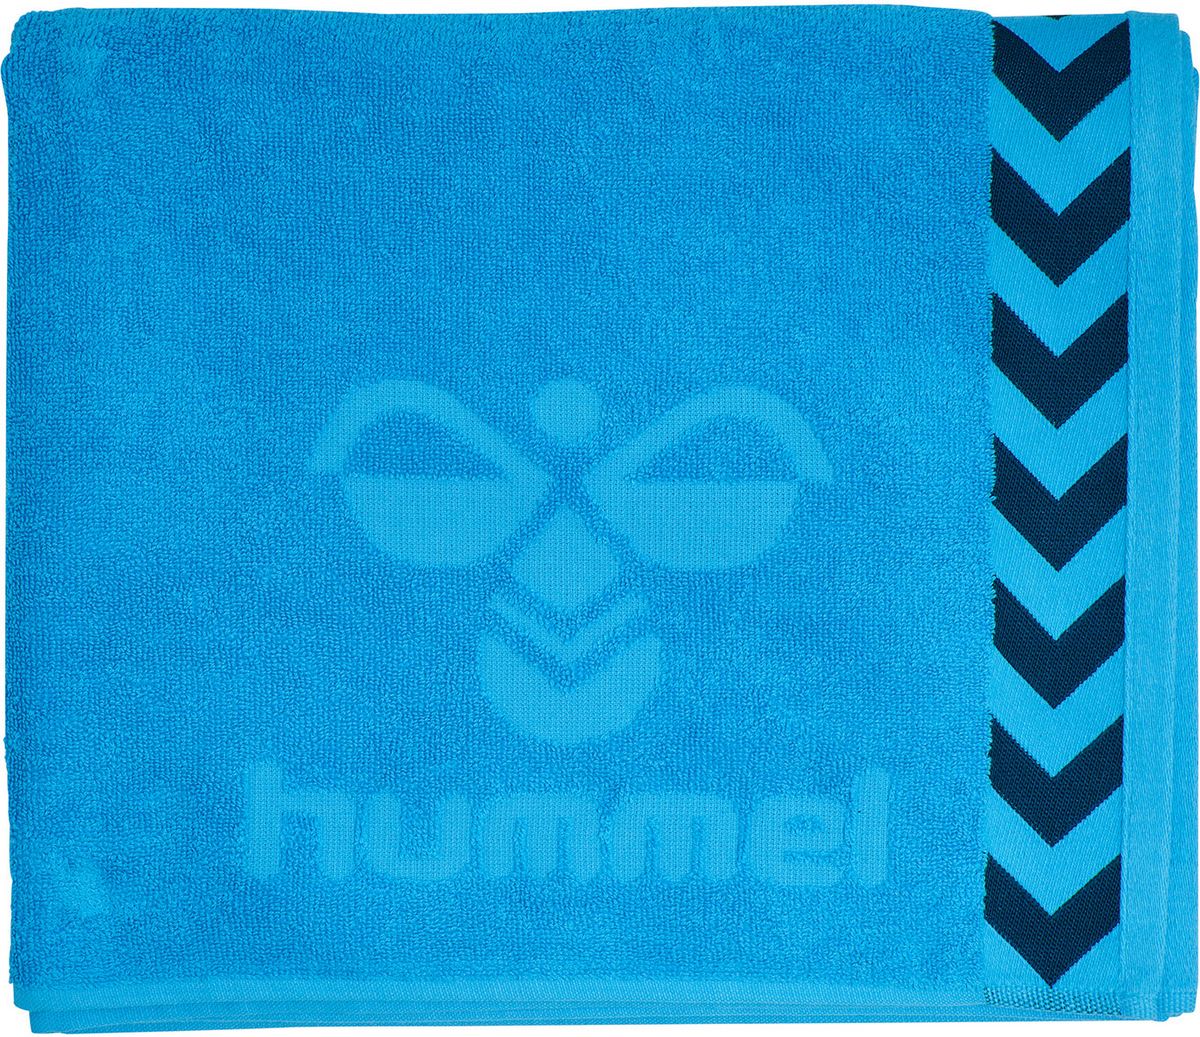 HUMMEL PETITE SERVIETTE 100x50 cm - Blue danube